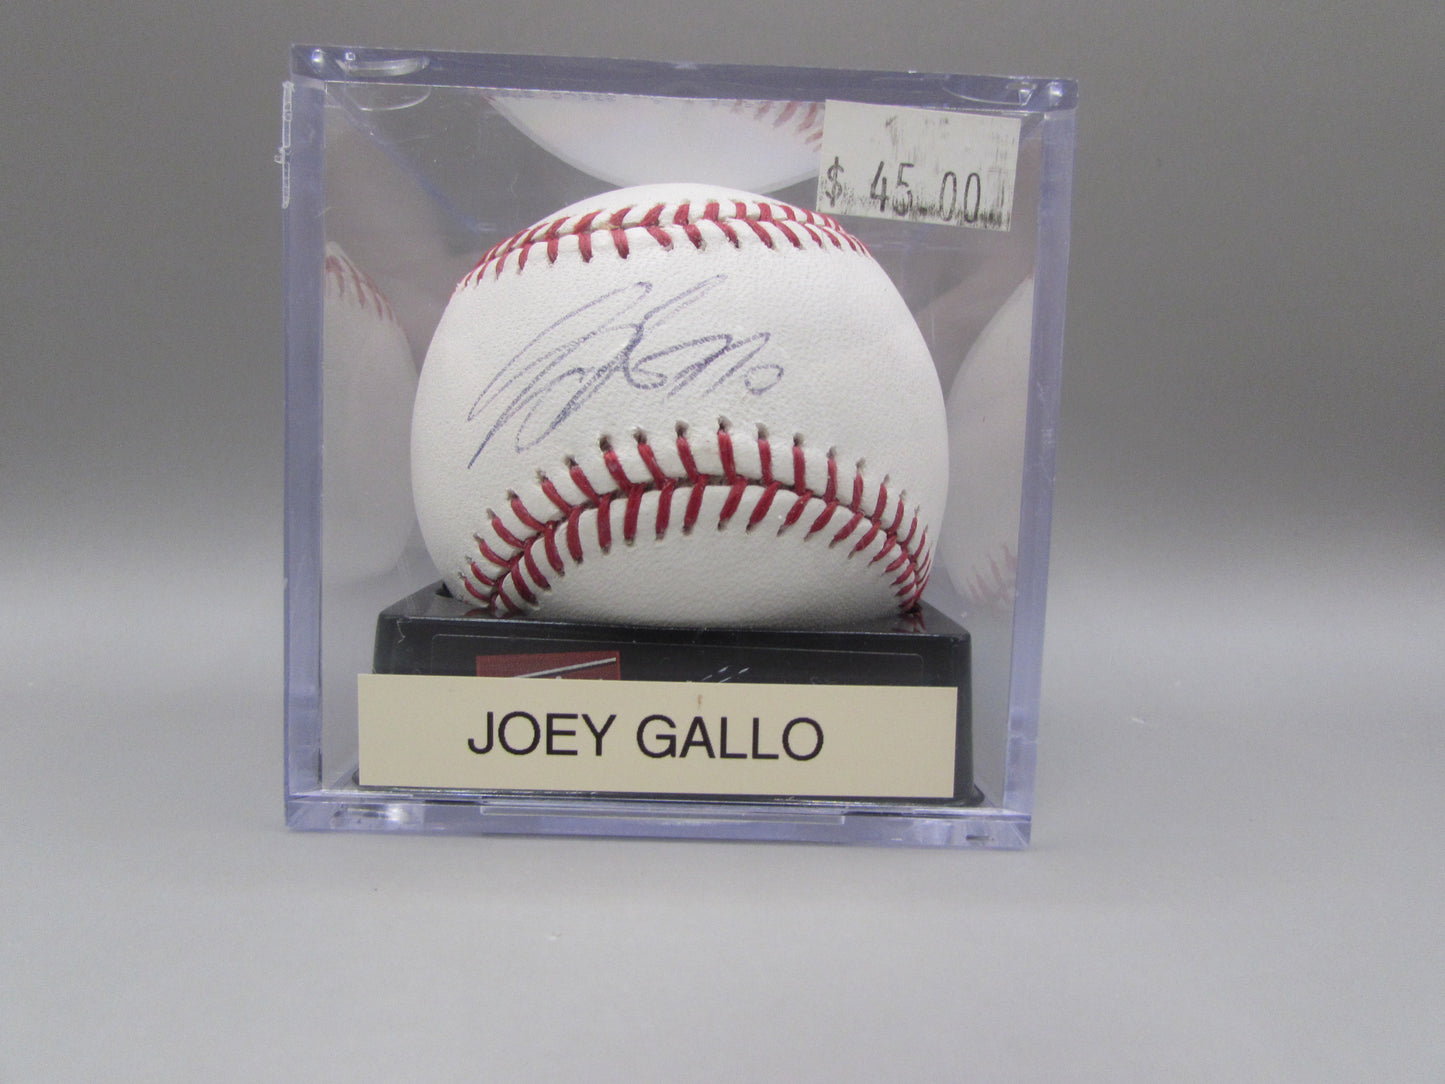 Joey Gallo signed baseball